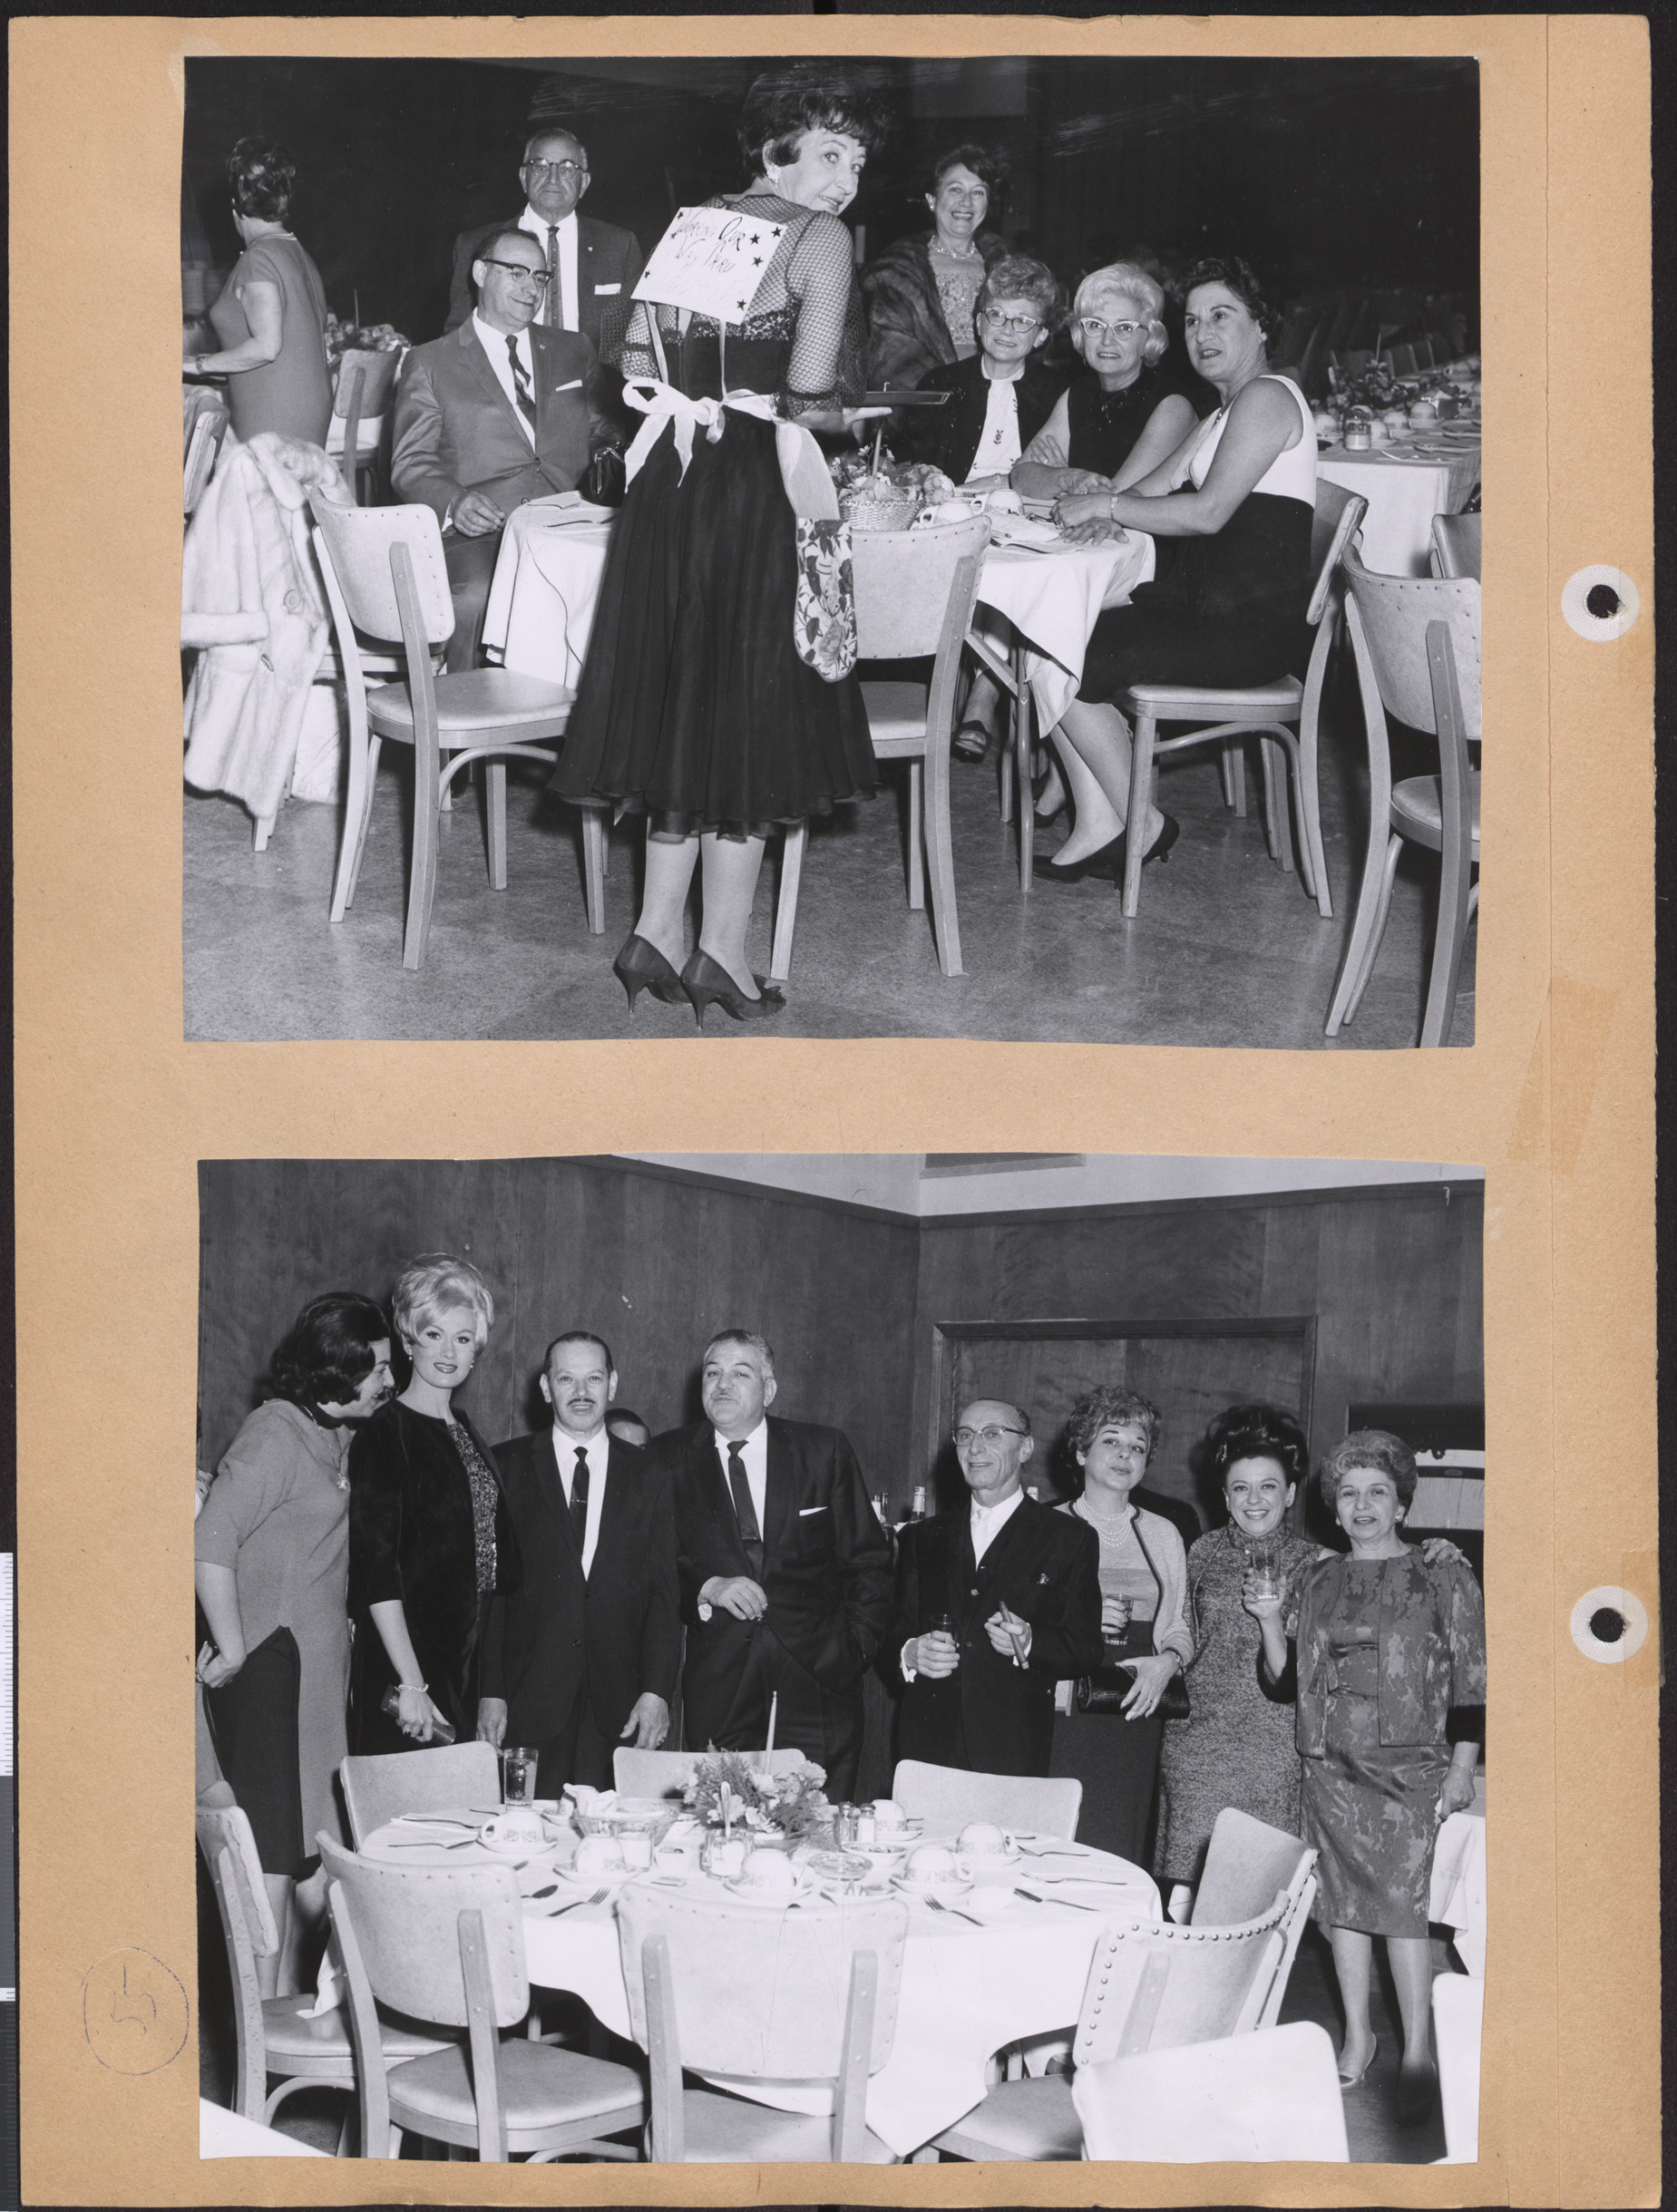 Photographs of Hadassah's second birthday party, January 16, 1966